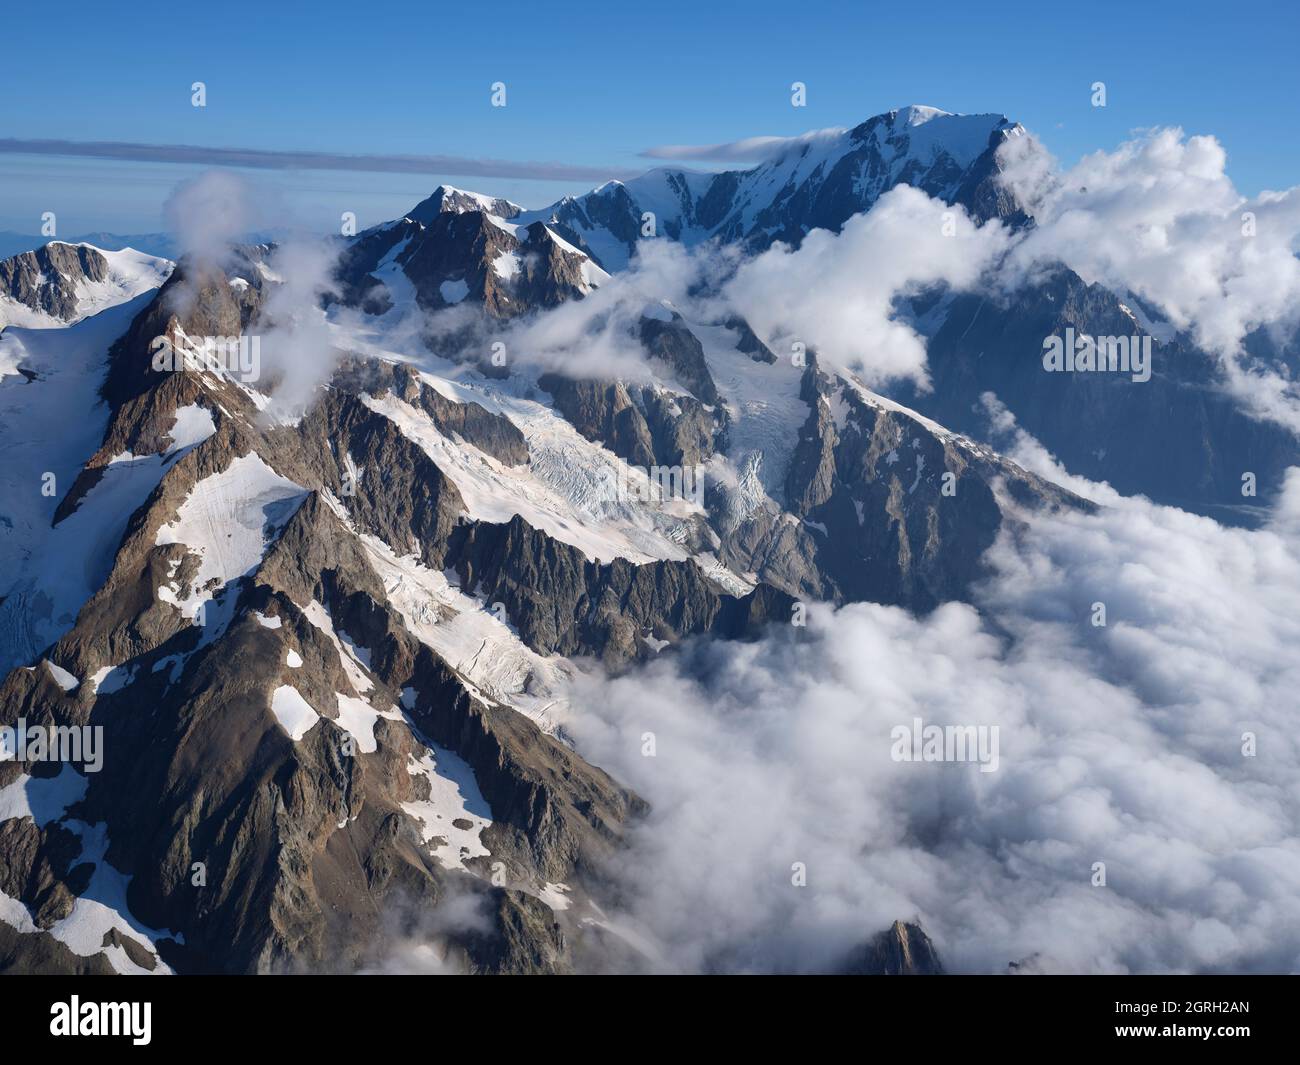 VISTA AEREA. Aiguille des Glaciers, Aiguille de Trè la Tête e Monte Bianco (in lontananza). Val Veni, Courmayeur, Valle d'Aosta, Italia. Foto Stock